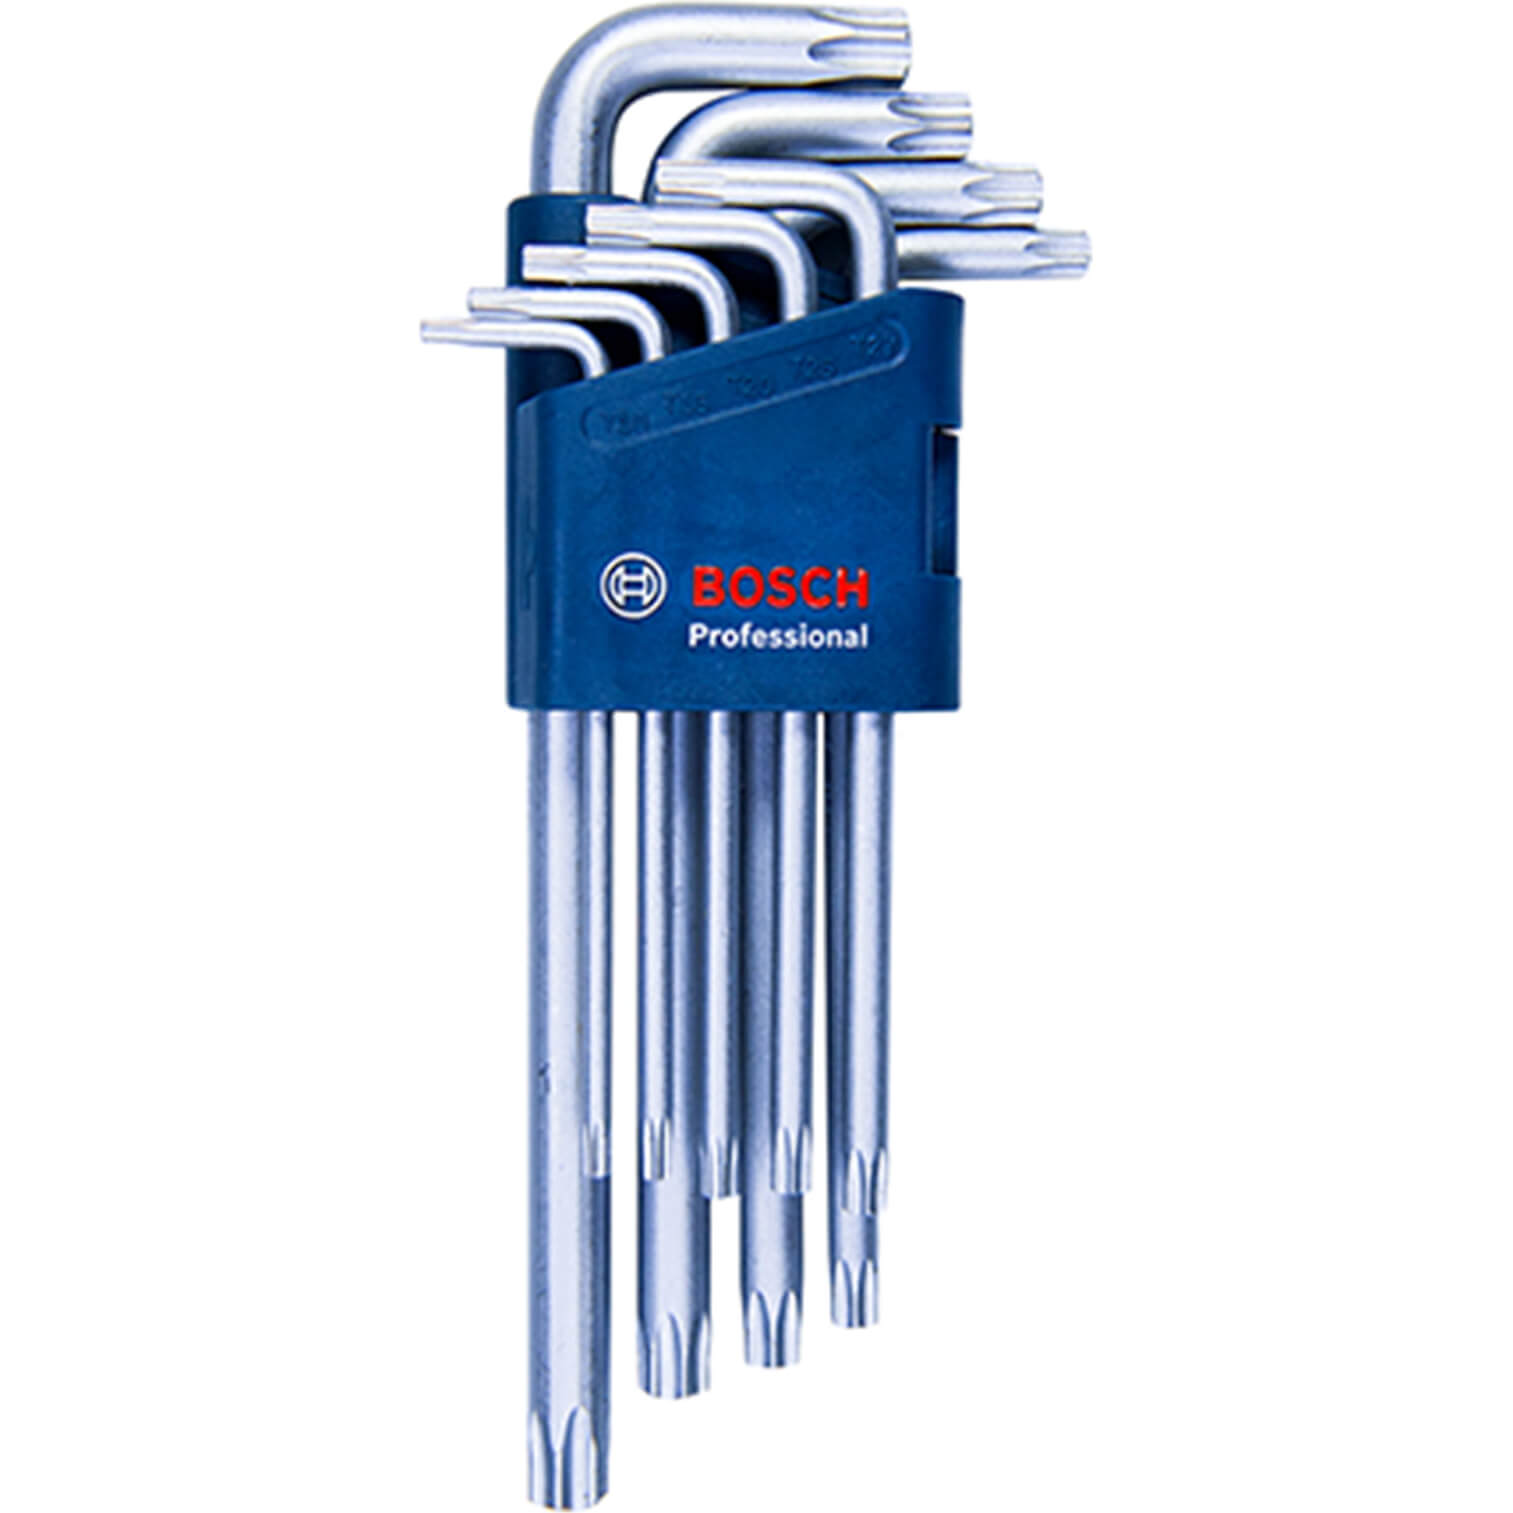 Image of Bosch Professional 9 Piece Allen Keys Set Torx